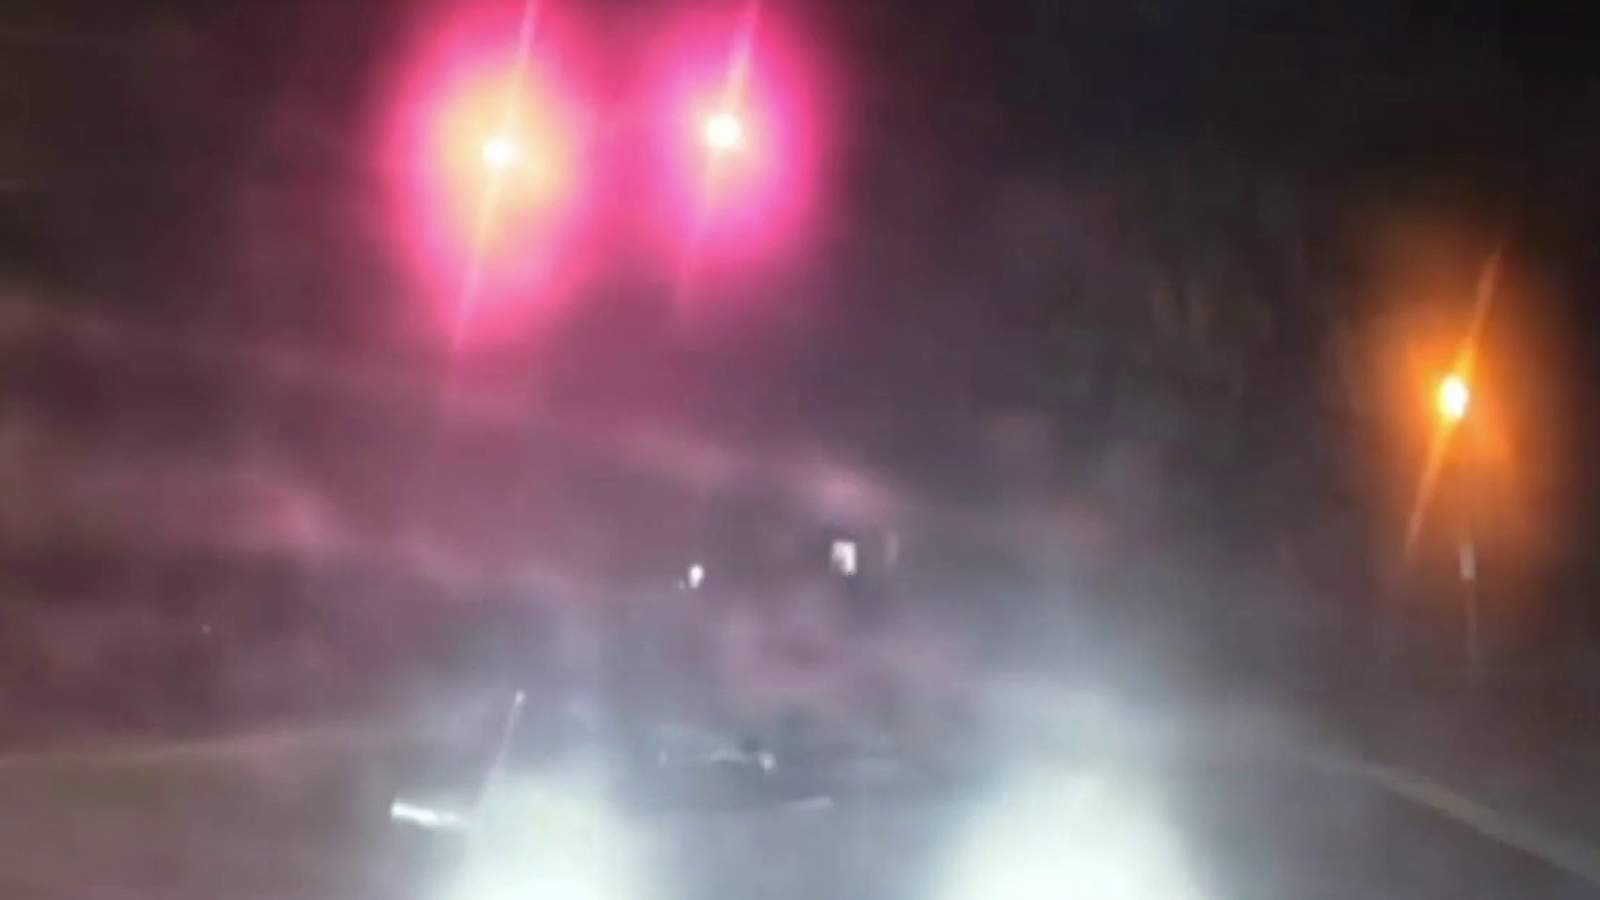 Video shows suspected drunken driver crashing into Florida deputy’s cruiser